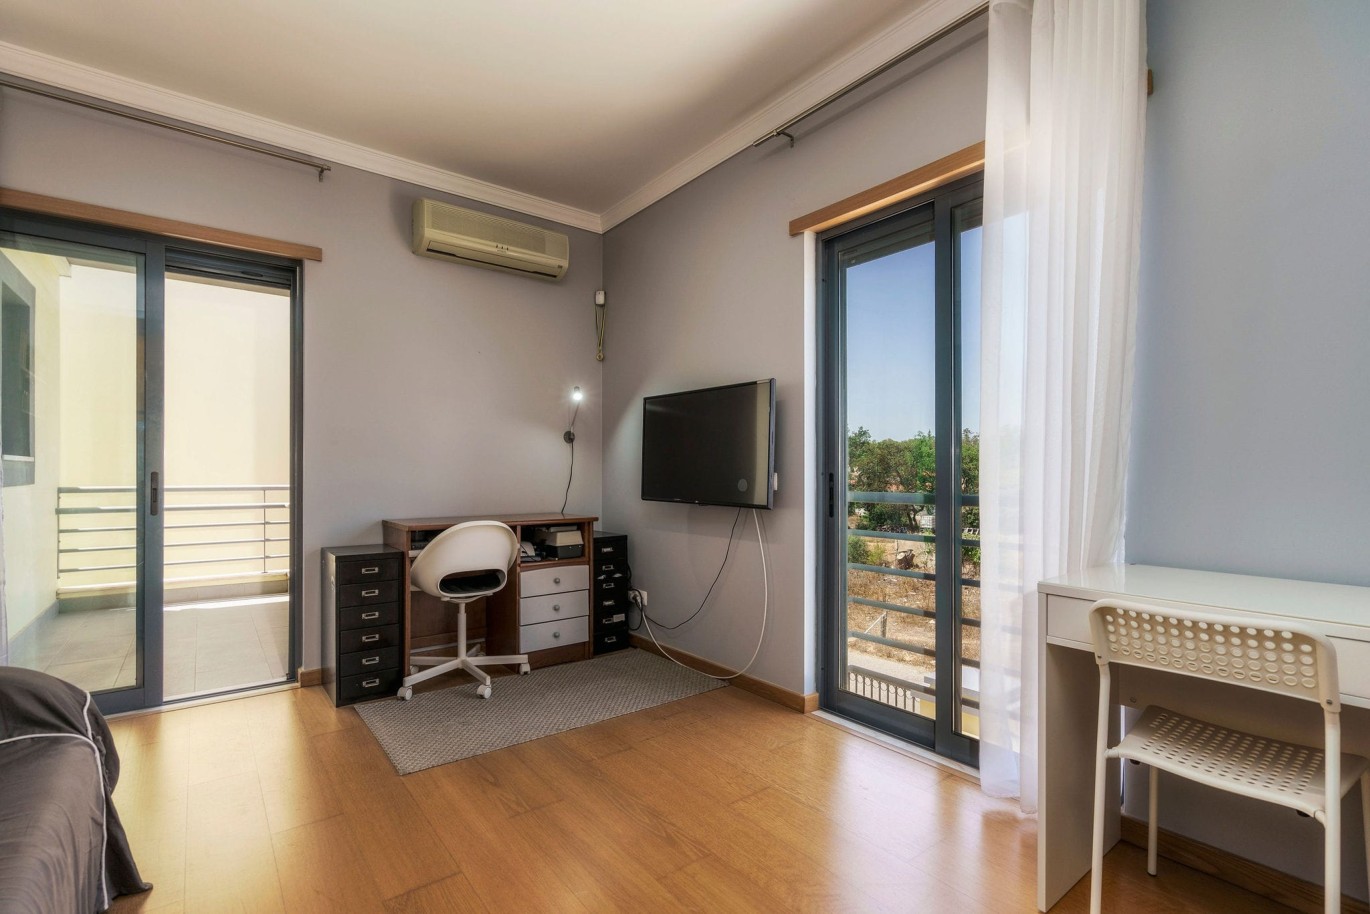 3+1 bedroom villa & 2 bedroom apartment for sale in Quarteira, Algarve_240757